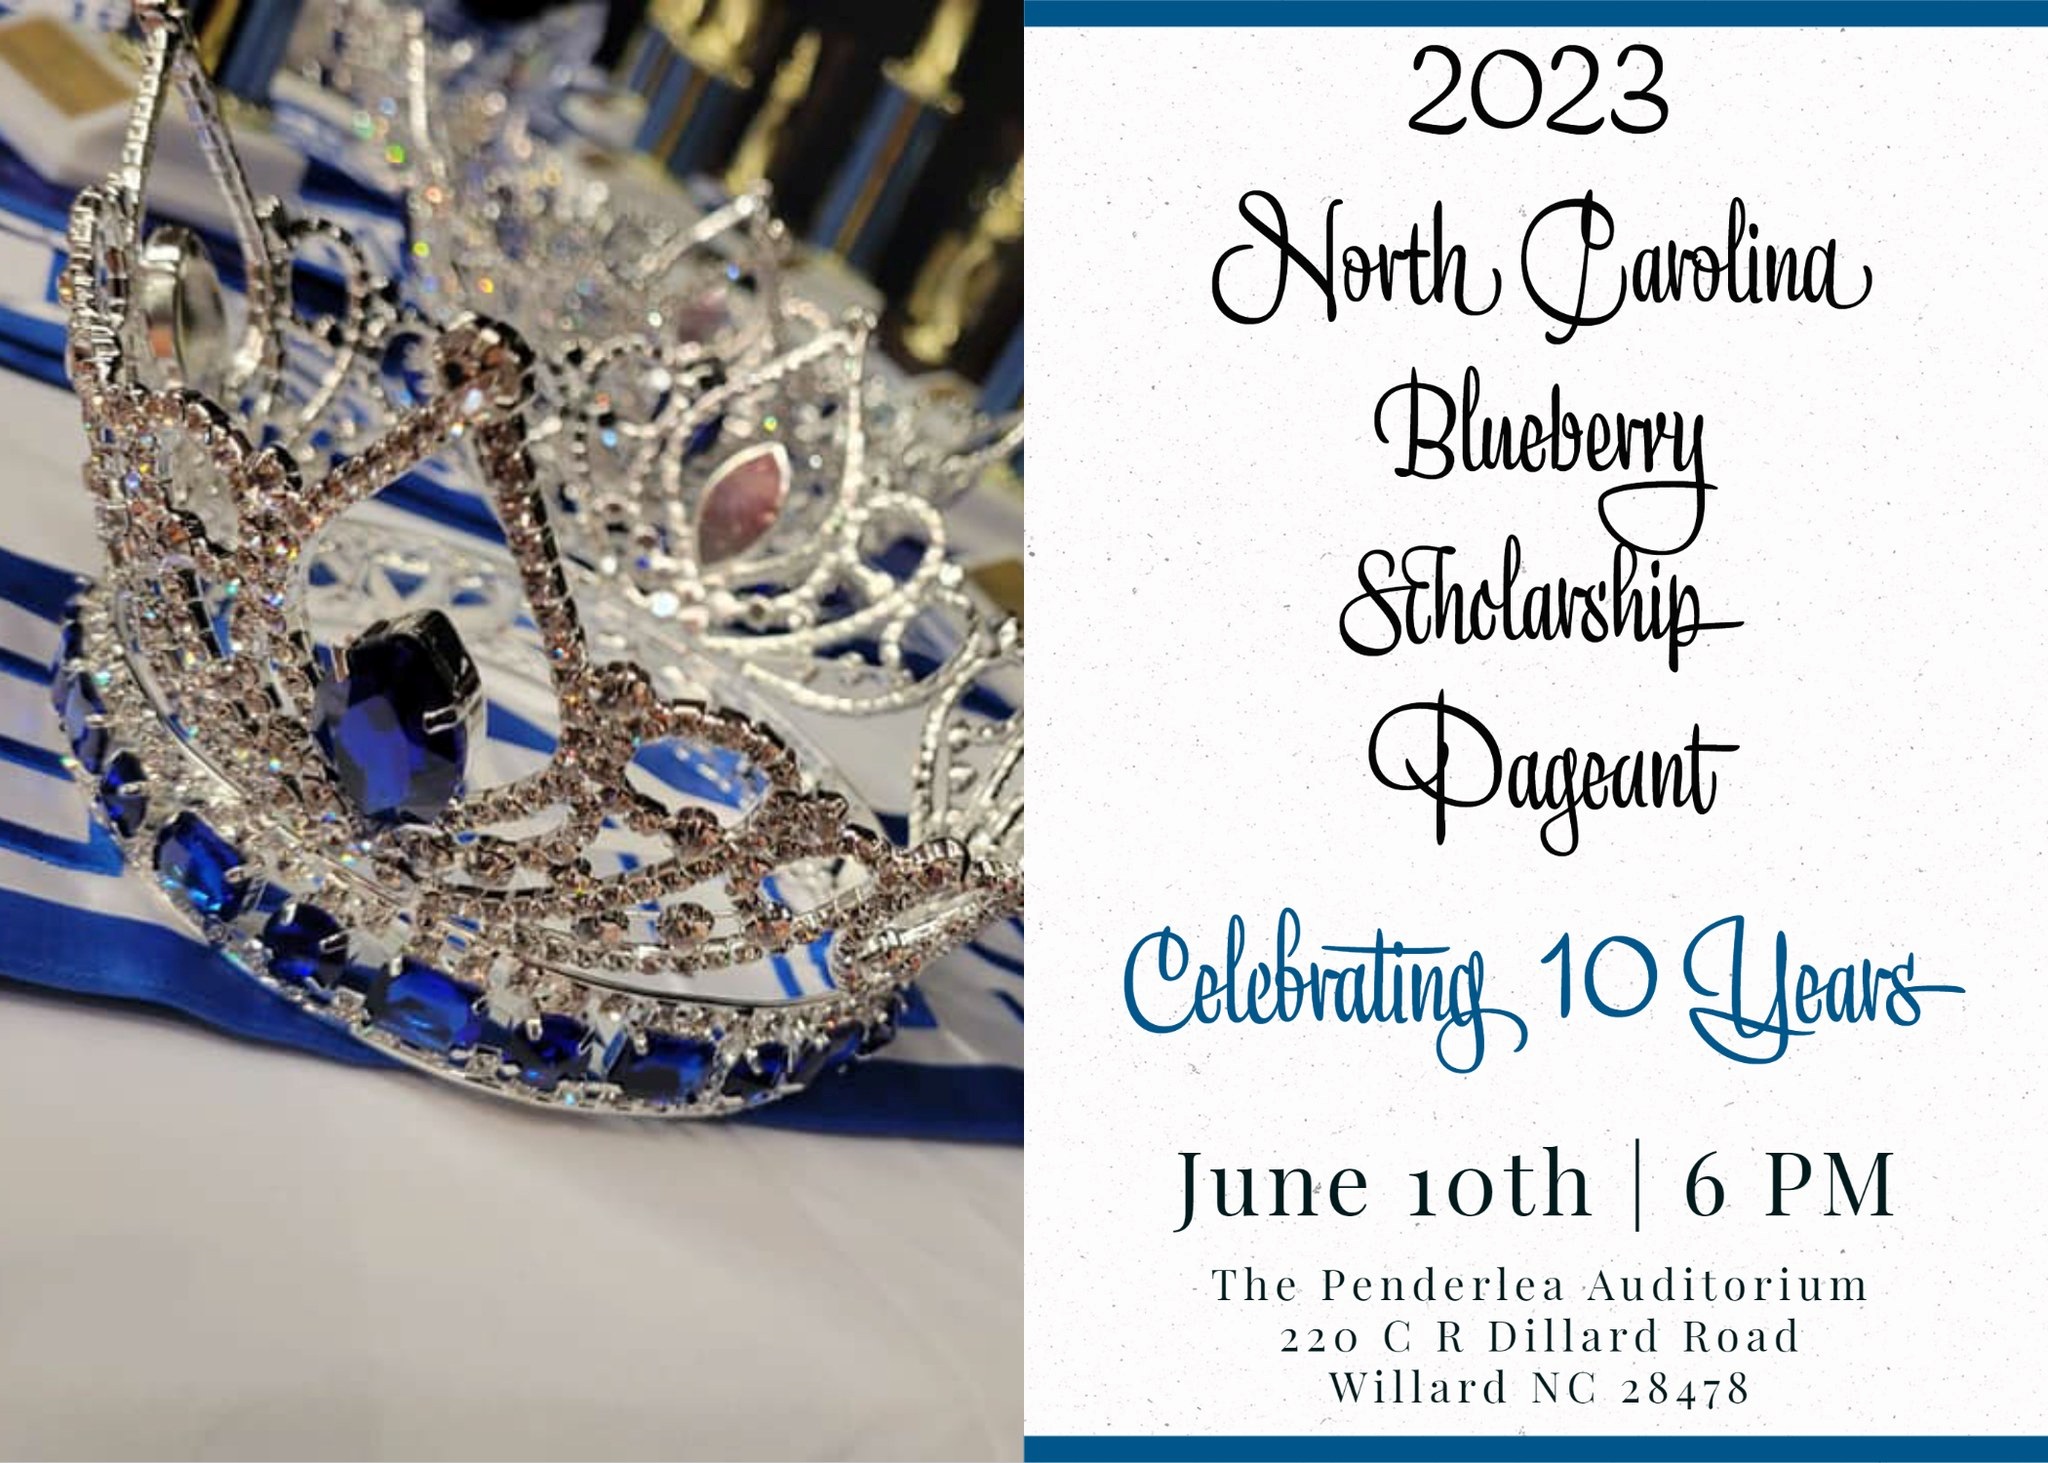 North Carolina Blueberry Scholarship Pageant